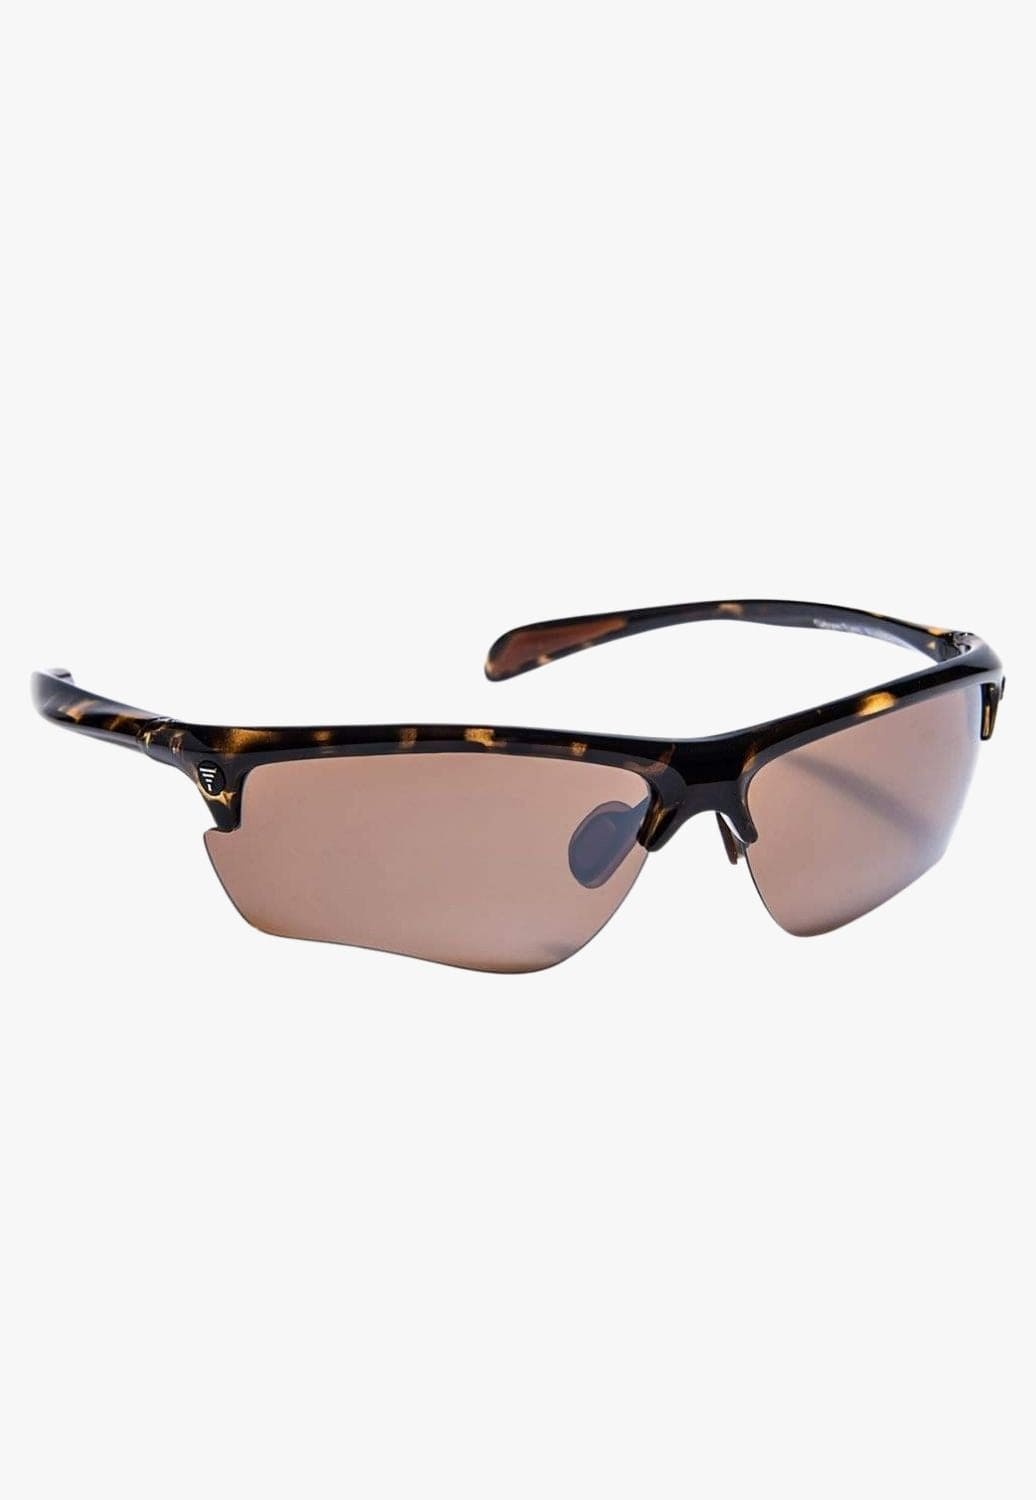 Gidgee Eyes ACCESSORIES-Sunglasses OSFA / Tortoise Gidgee Eyes Elite Sunglasses